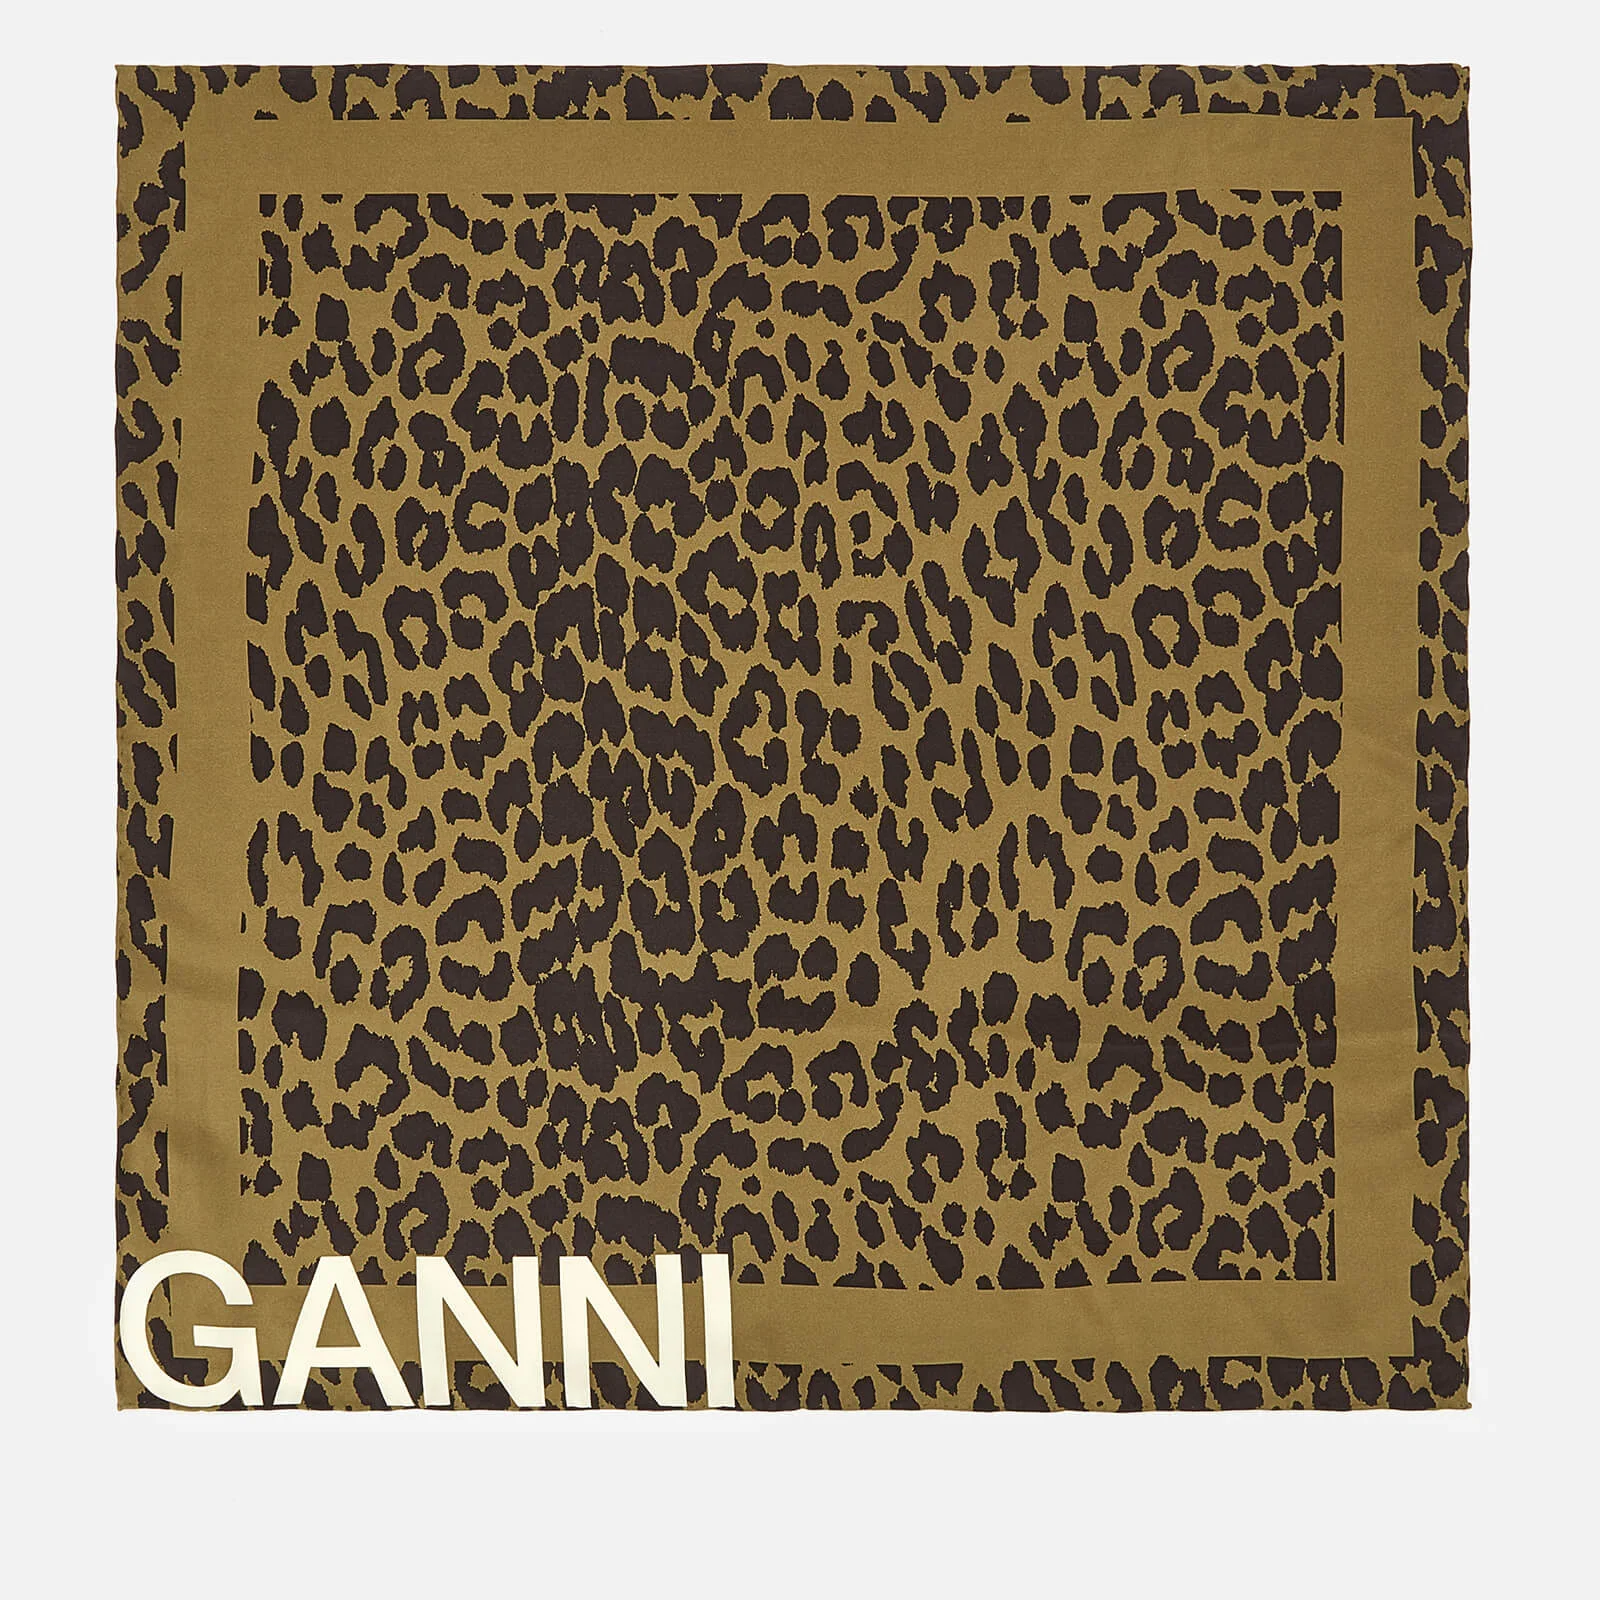 Ganni Women's Leopard Print Scarf - Olive Drab Image 1